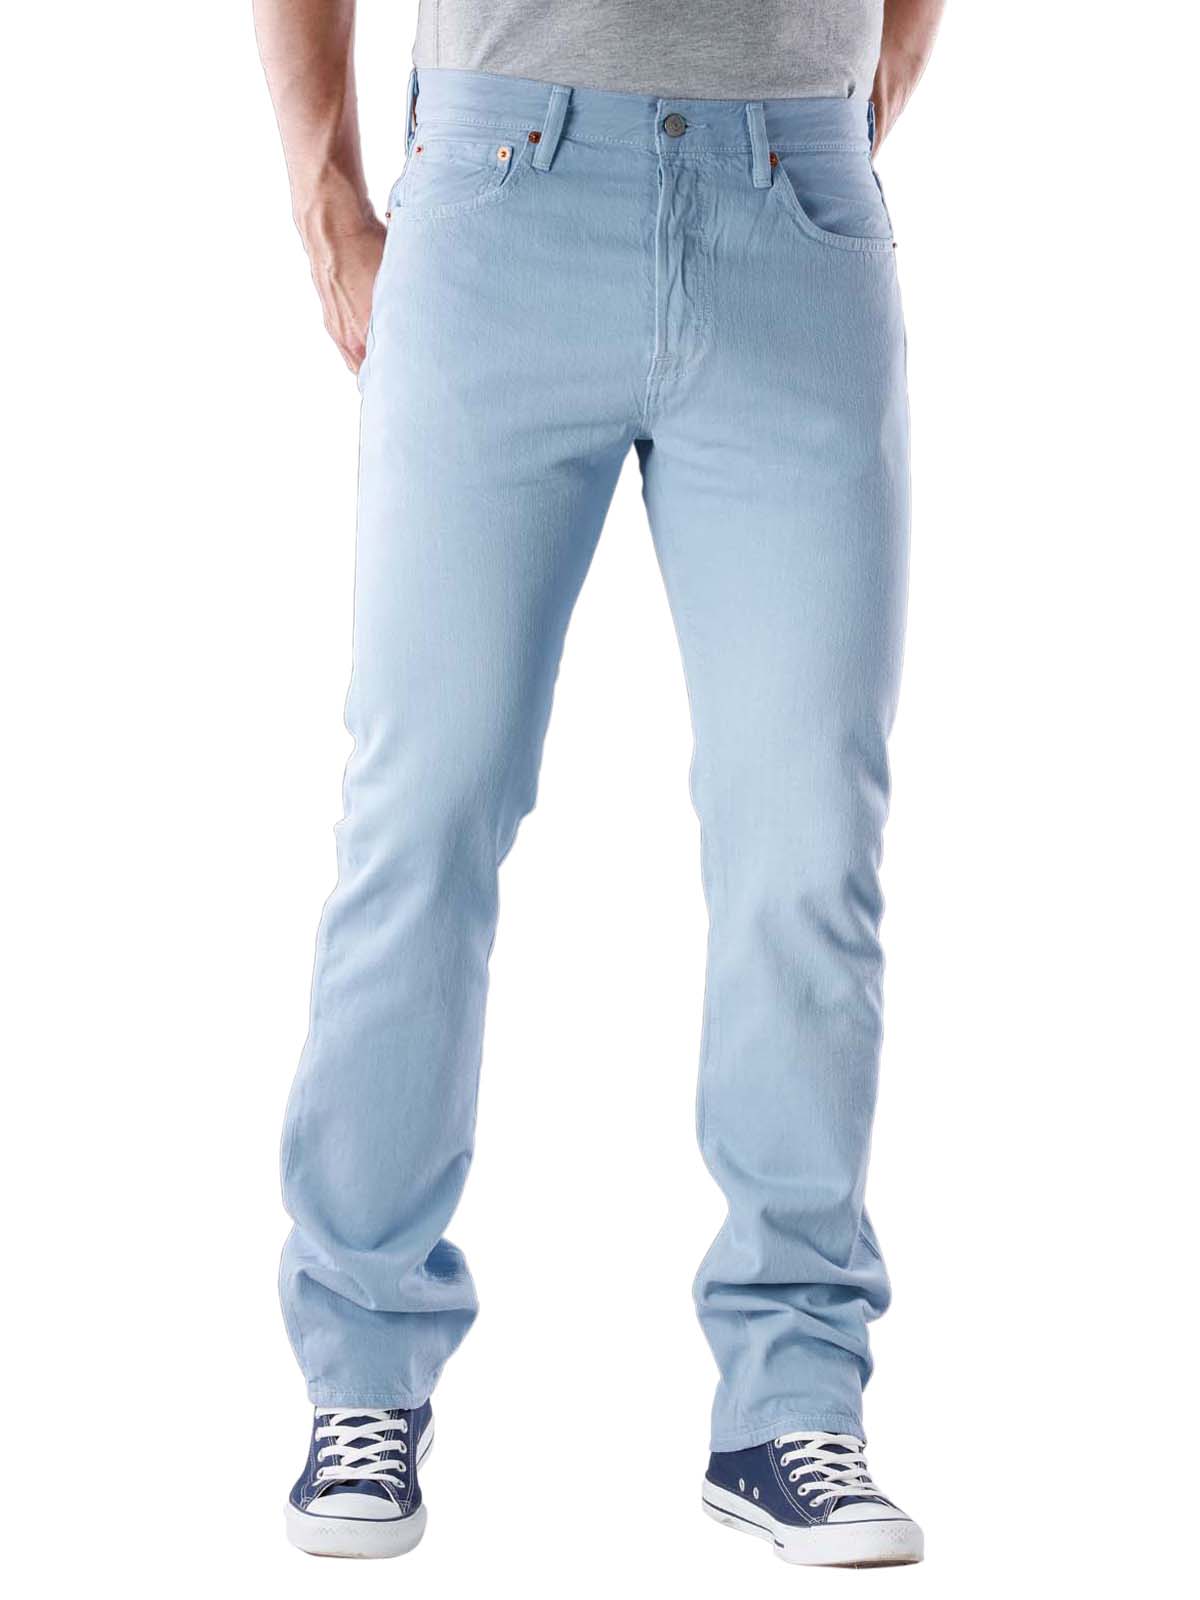 light blue levi jeans